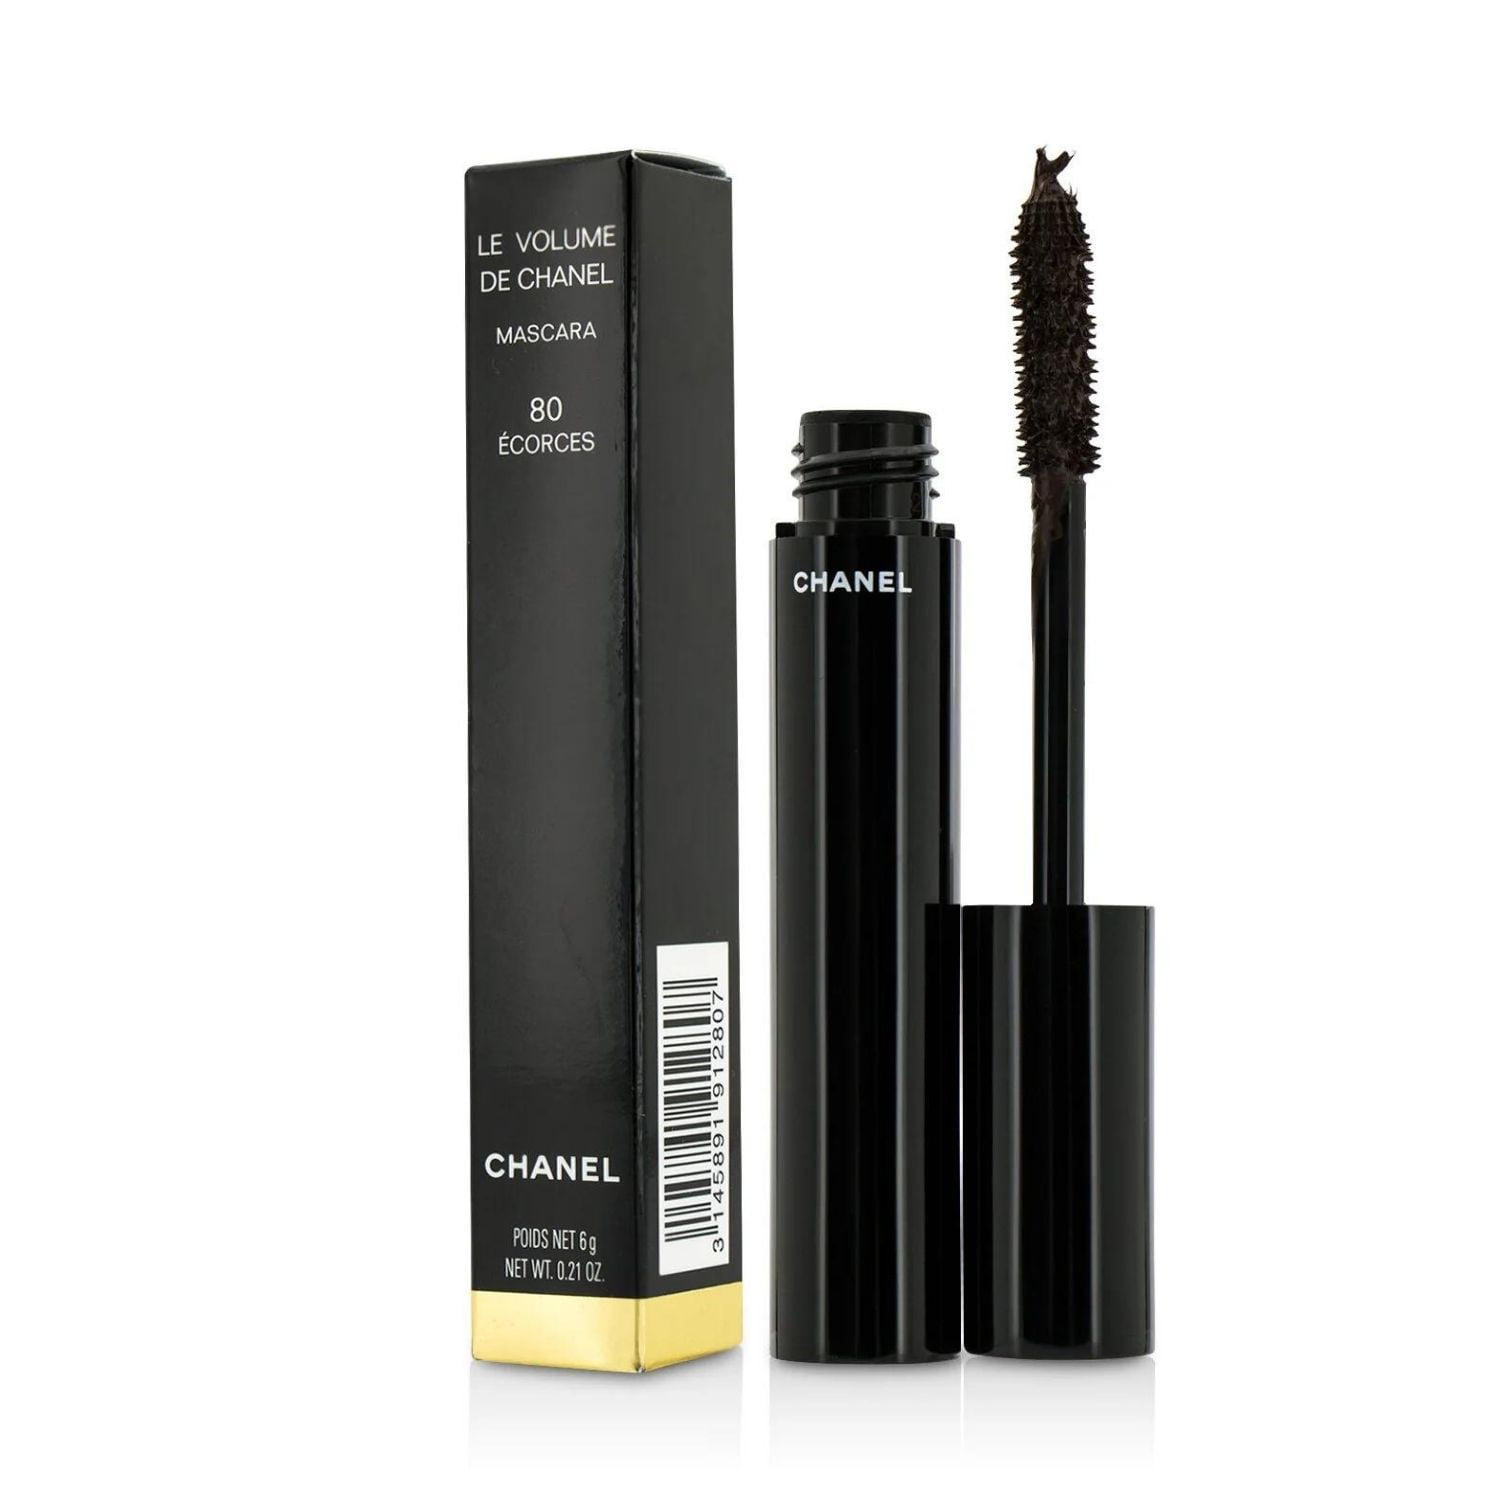 Chanel Women's Le Volume de Chanel Mascara - 80 Ecorces